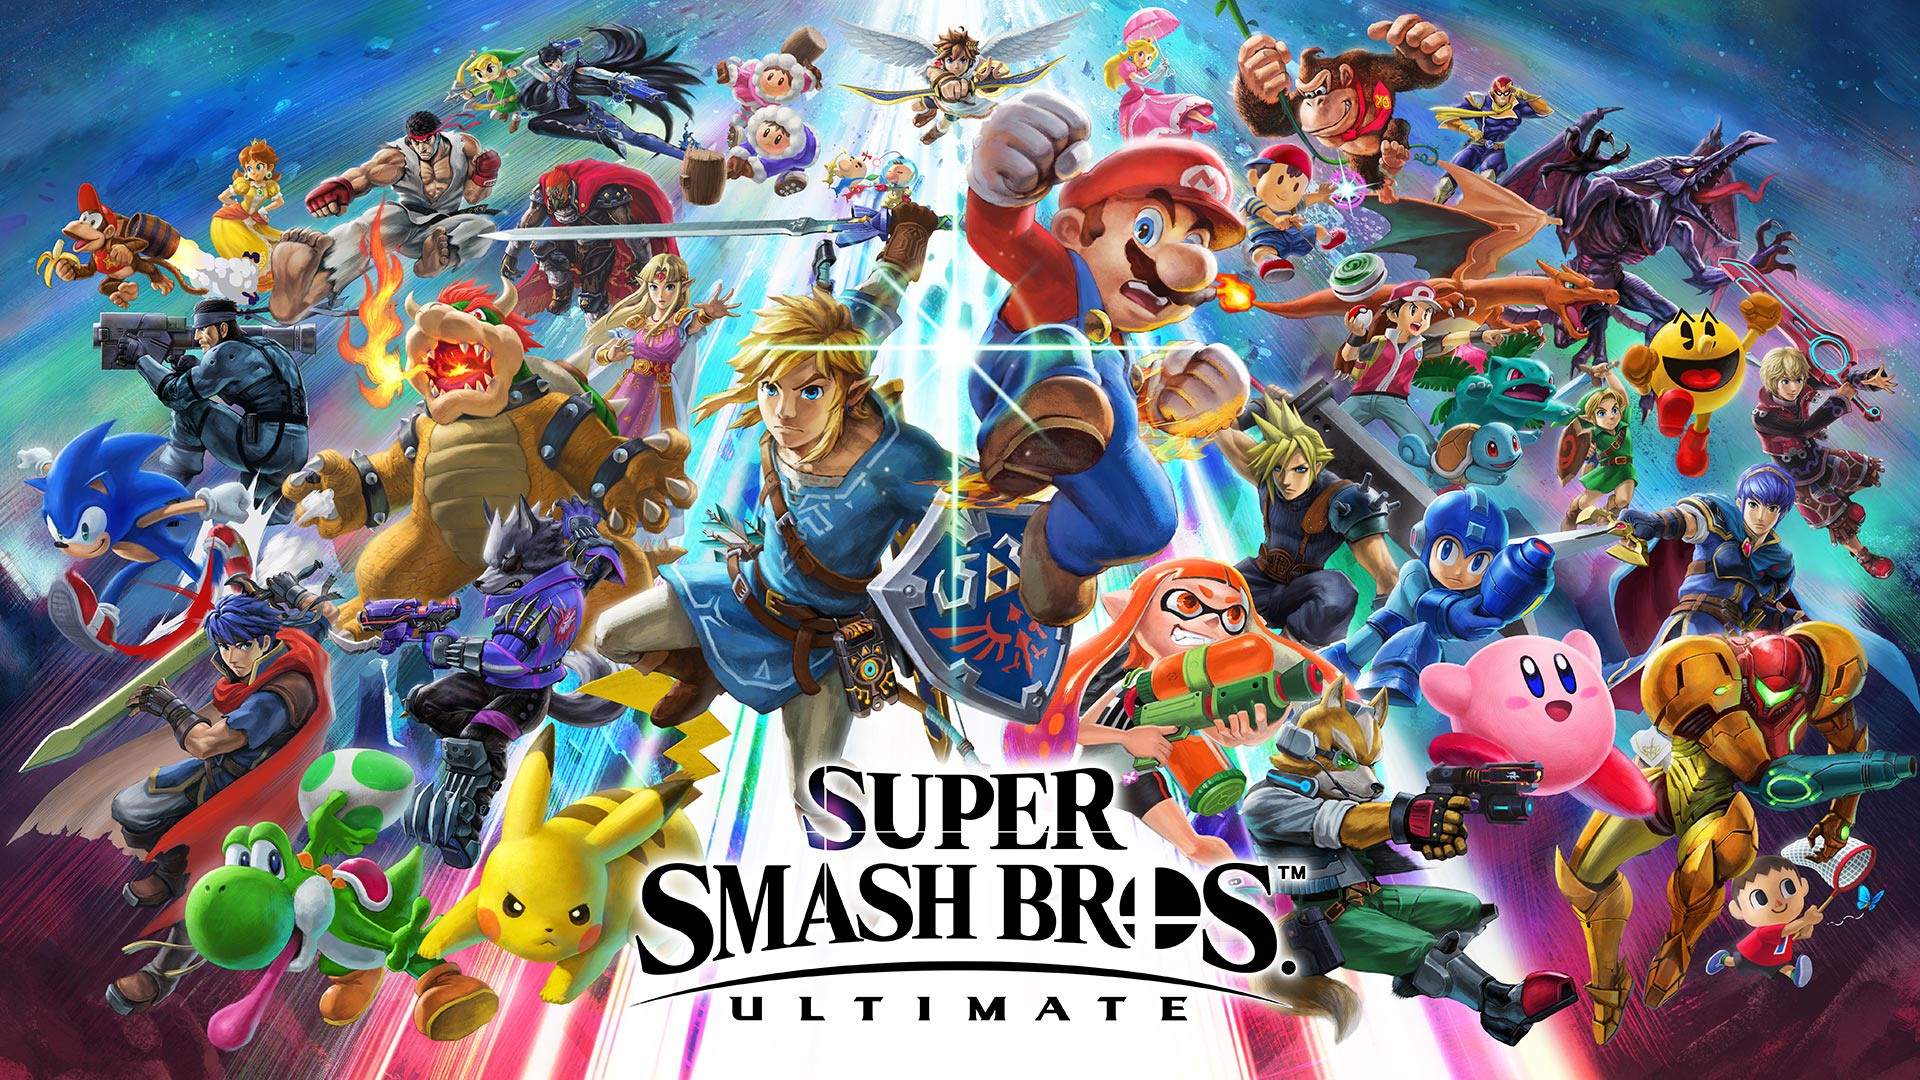 Super Smash Bros. Ultimate – Version 11.0.0 is Now Live